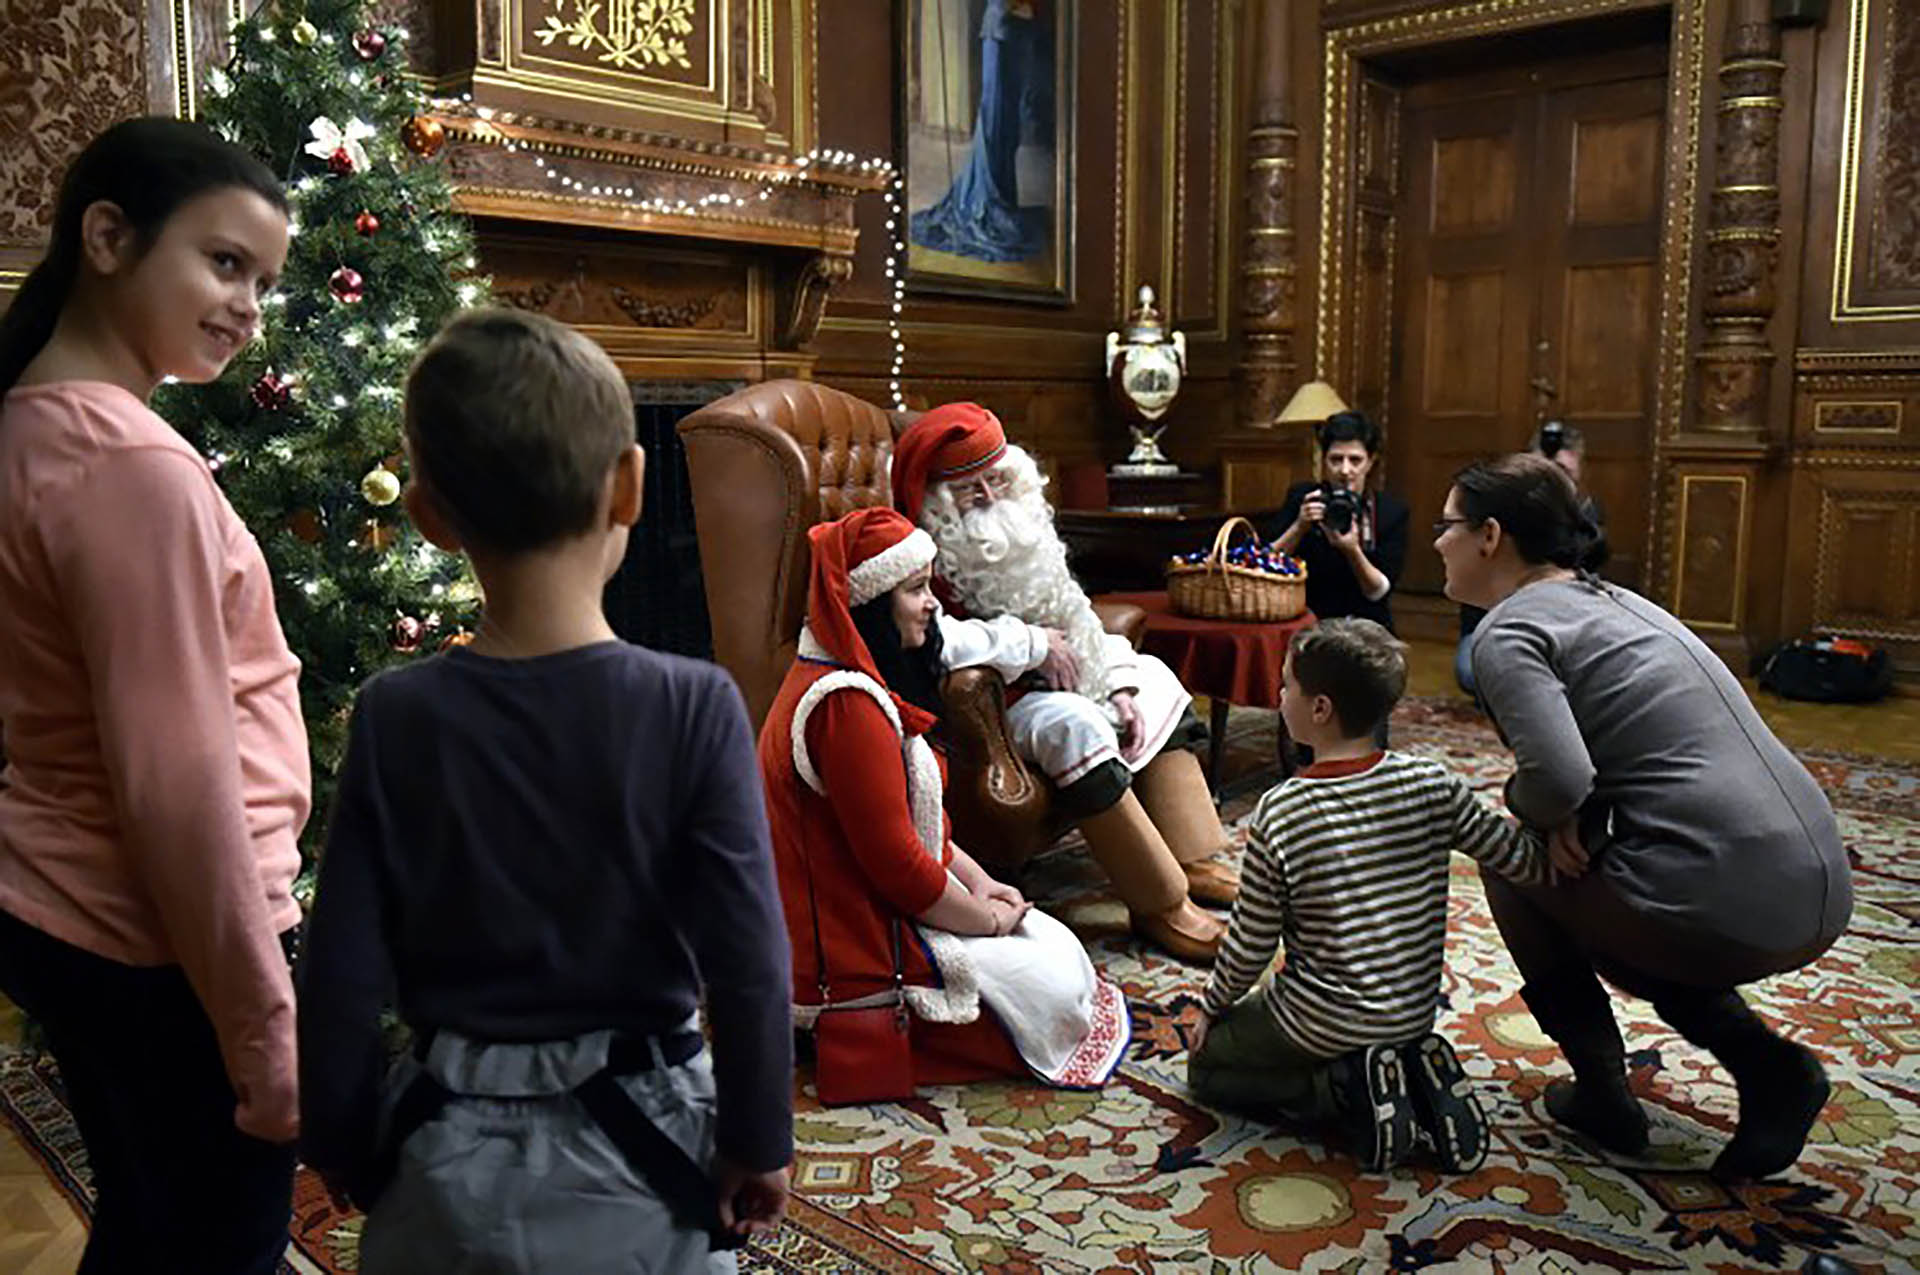 Joulupukki – The Original Finnish Santa Claus Arrives To Hungary